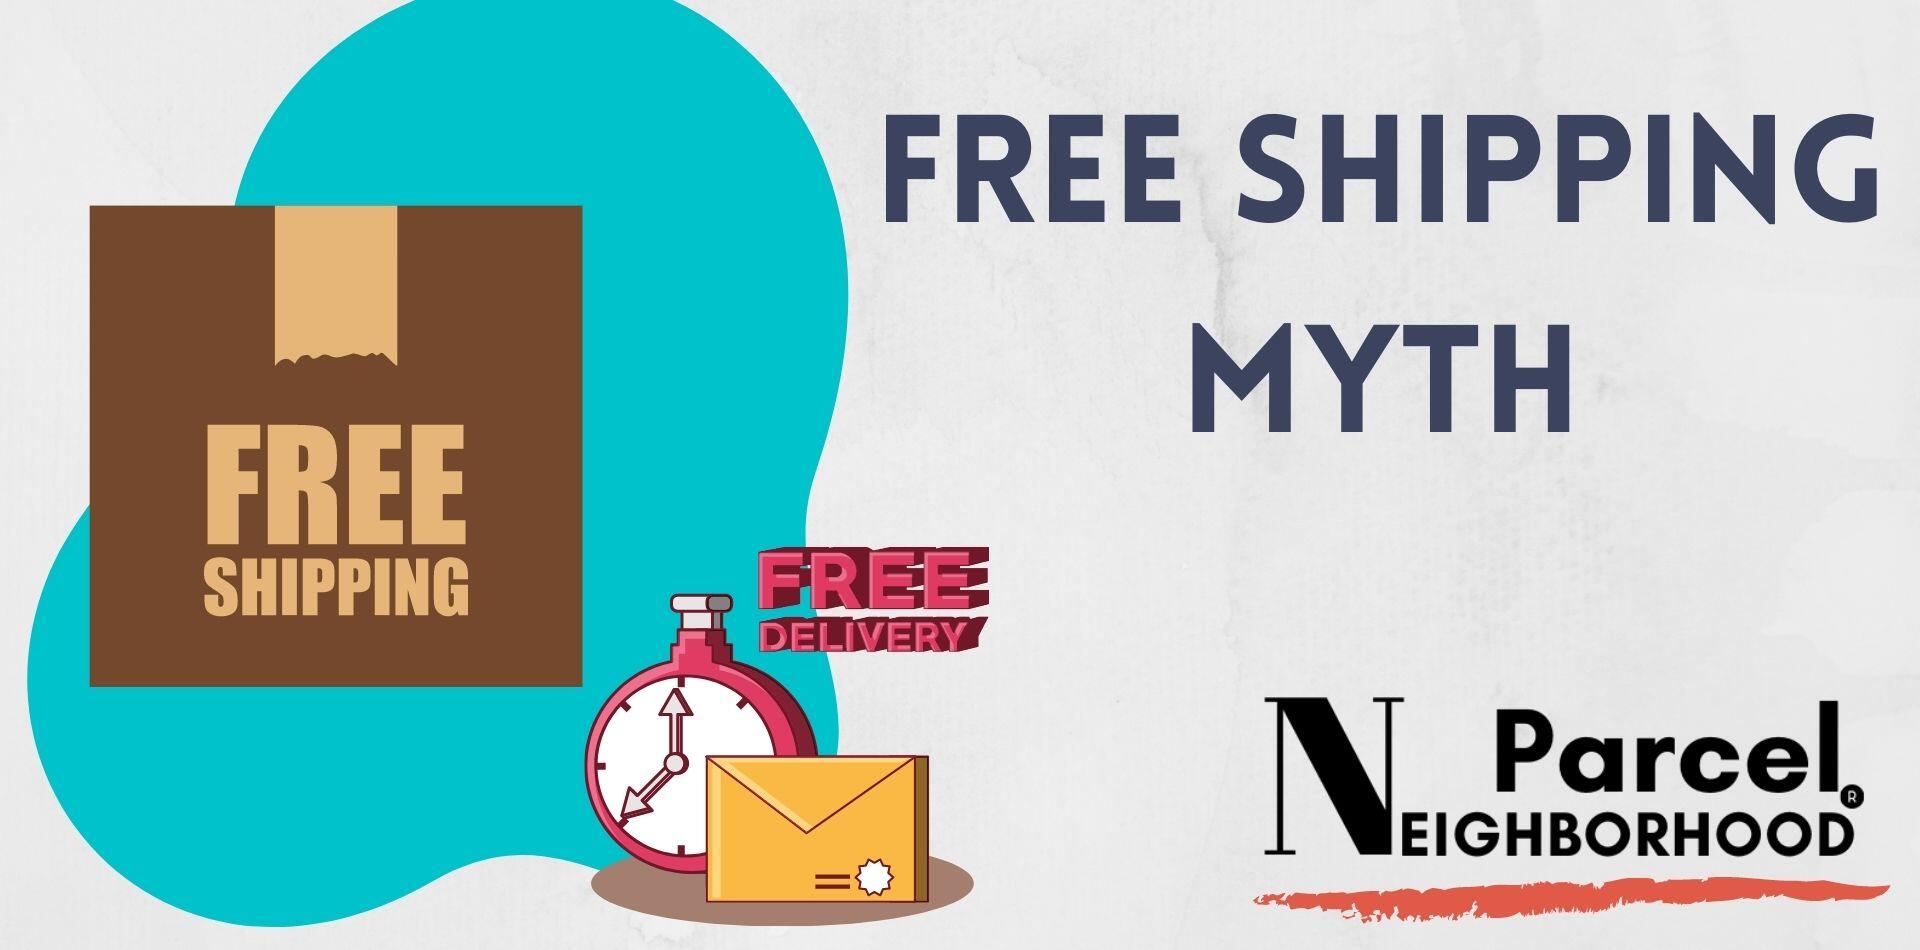 Free Shipping Myth